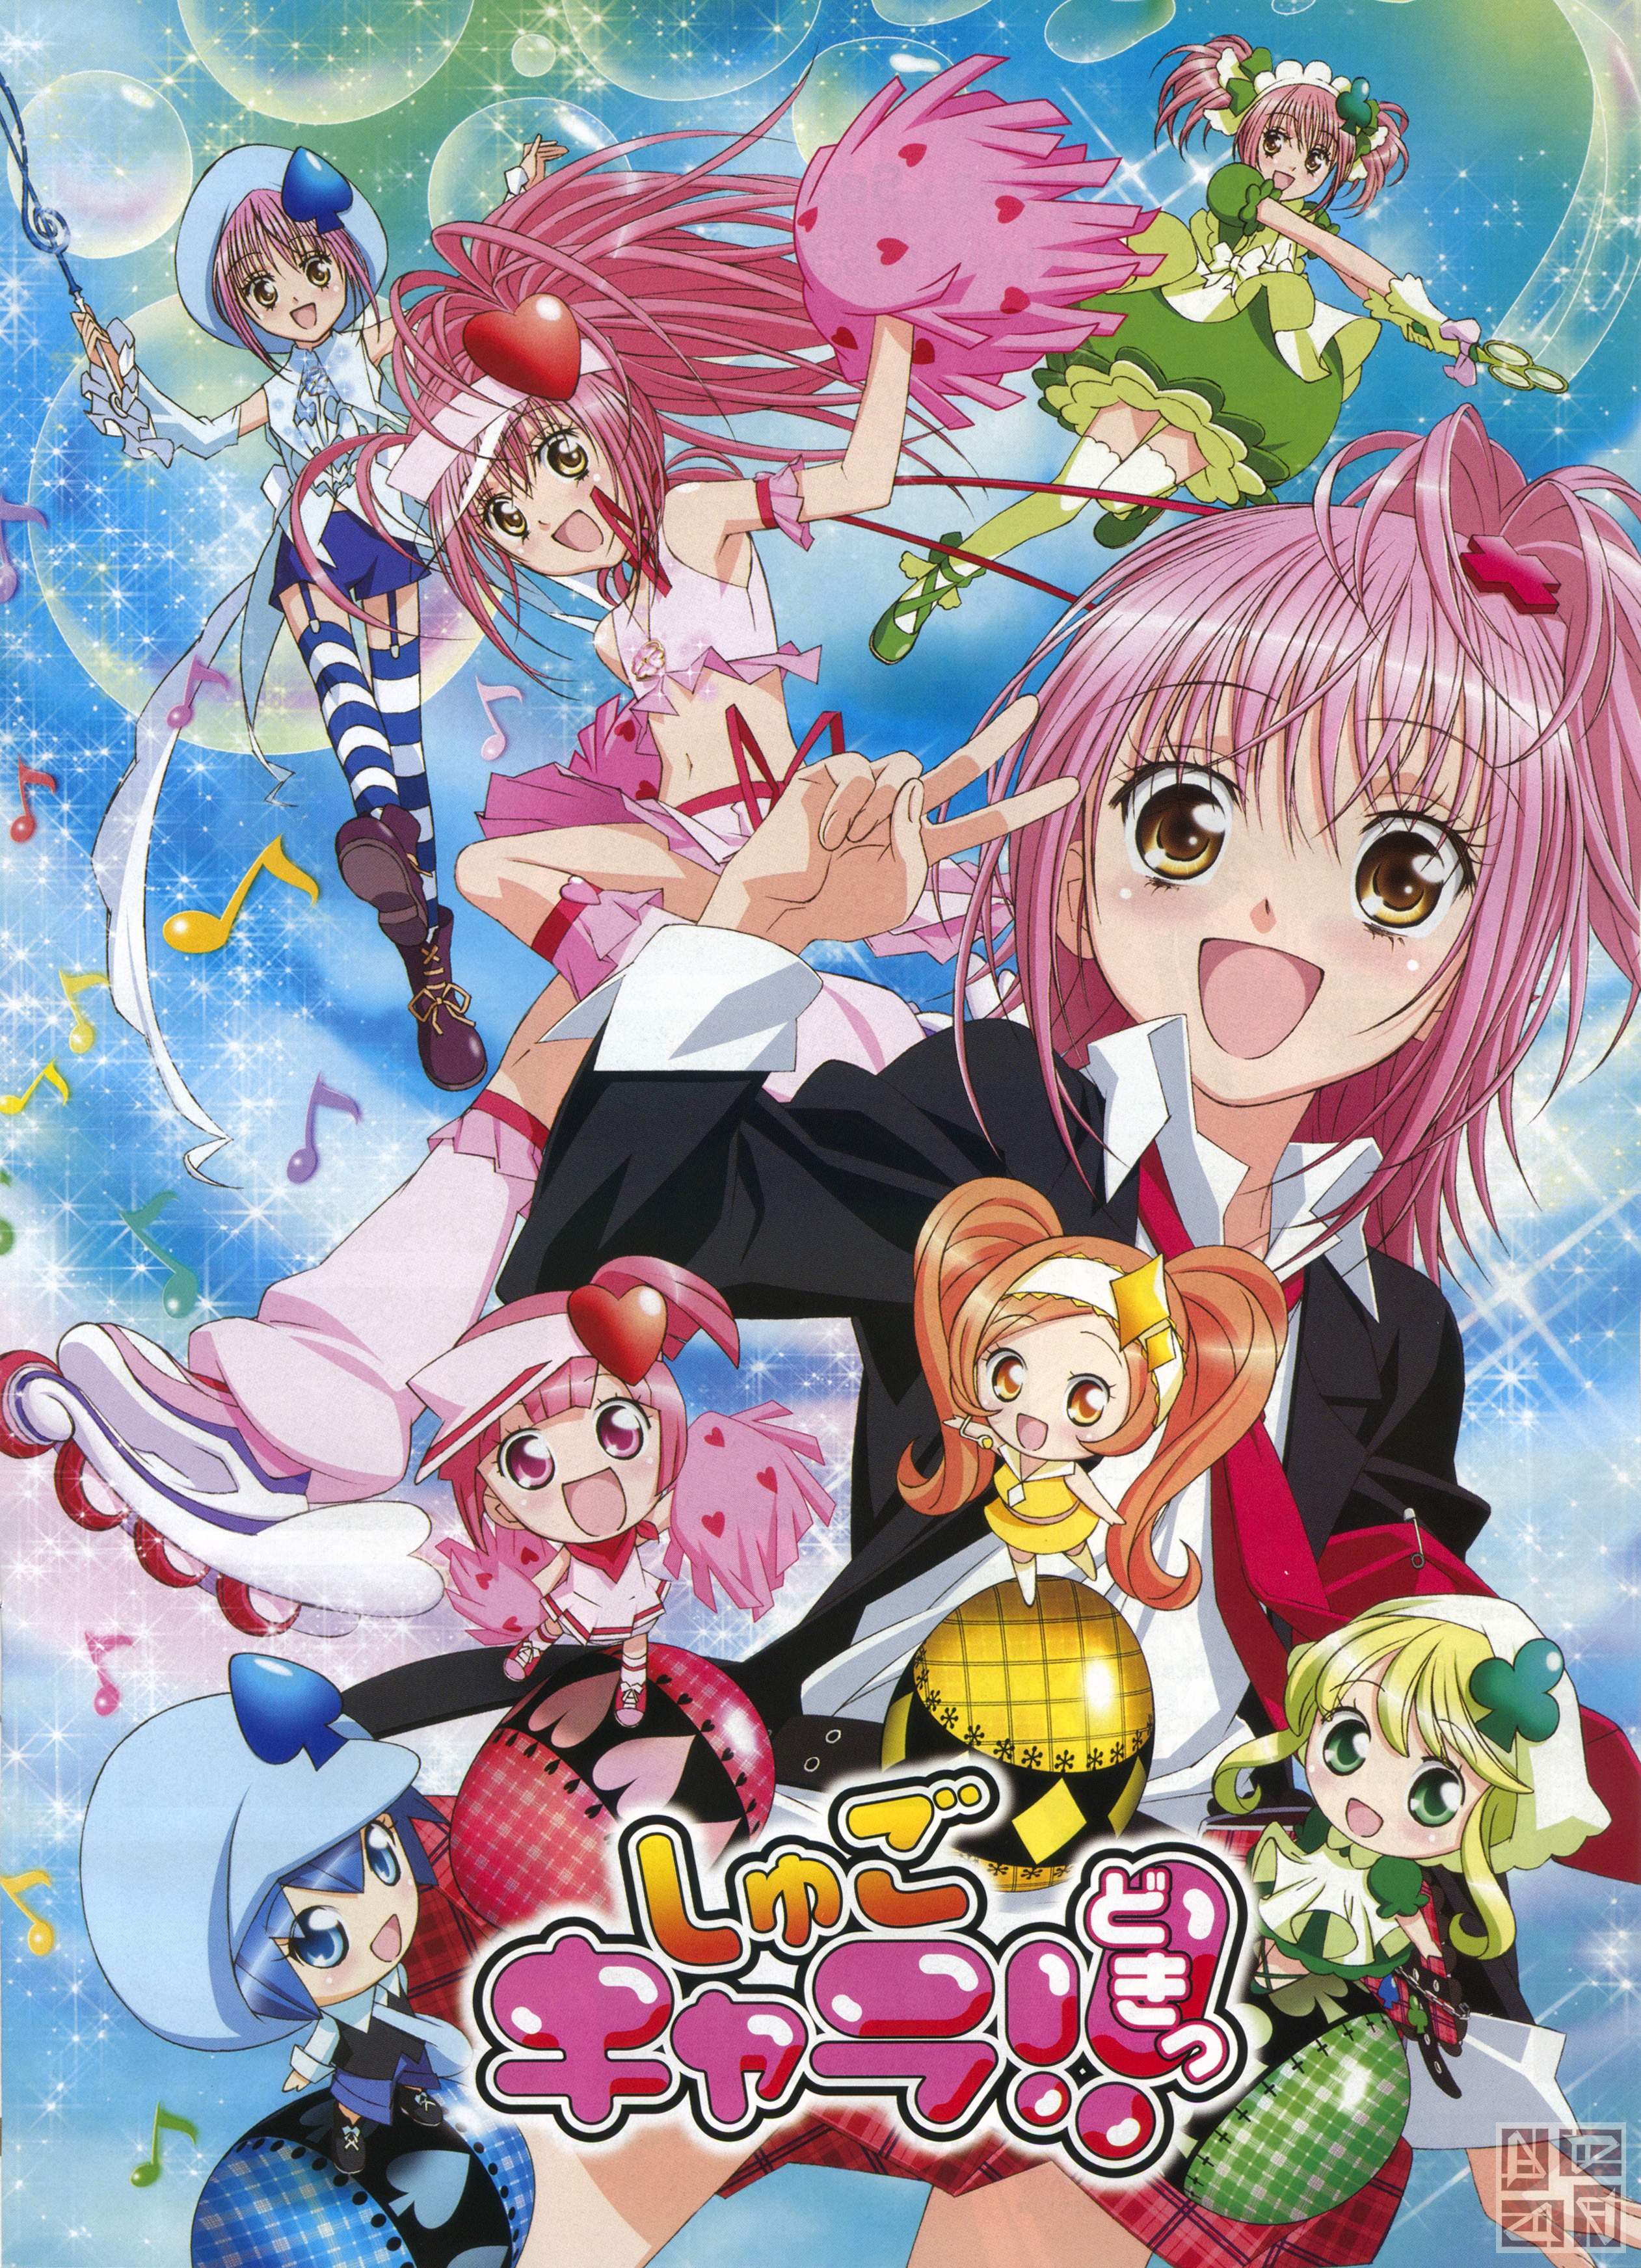 Anime-Fandub - Anime-Fandub updated their cover photo.